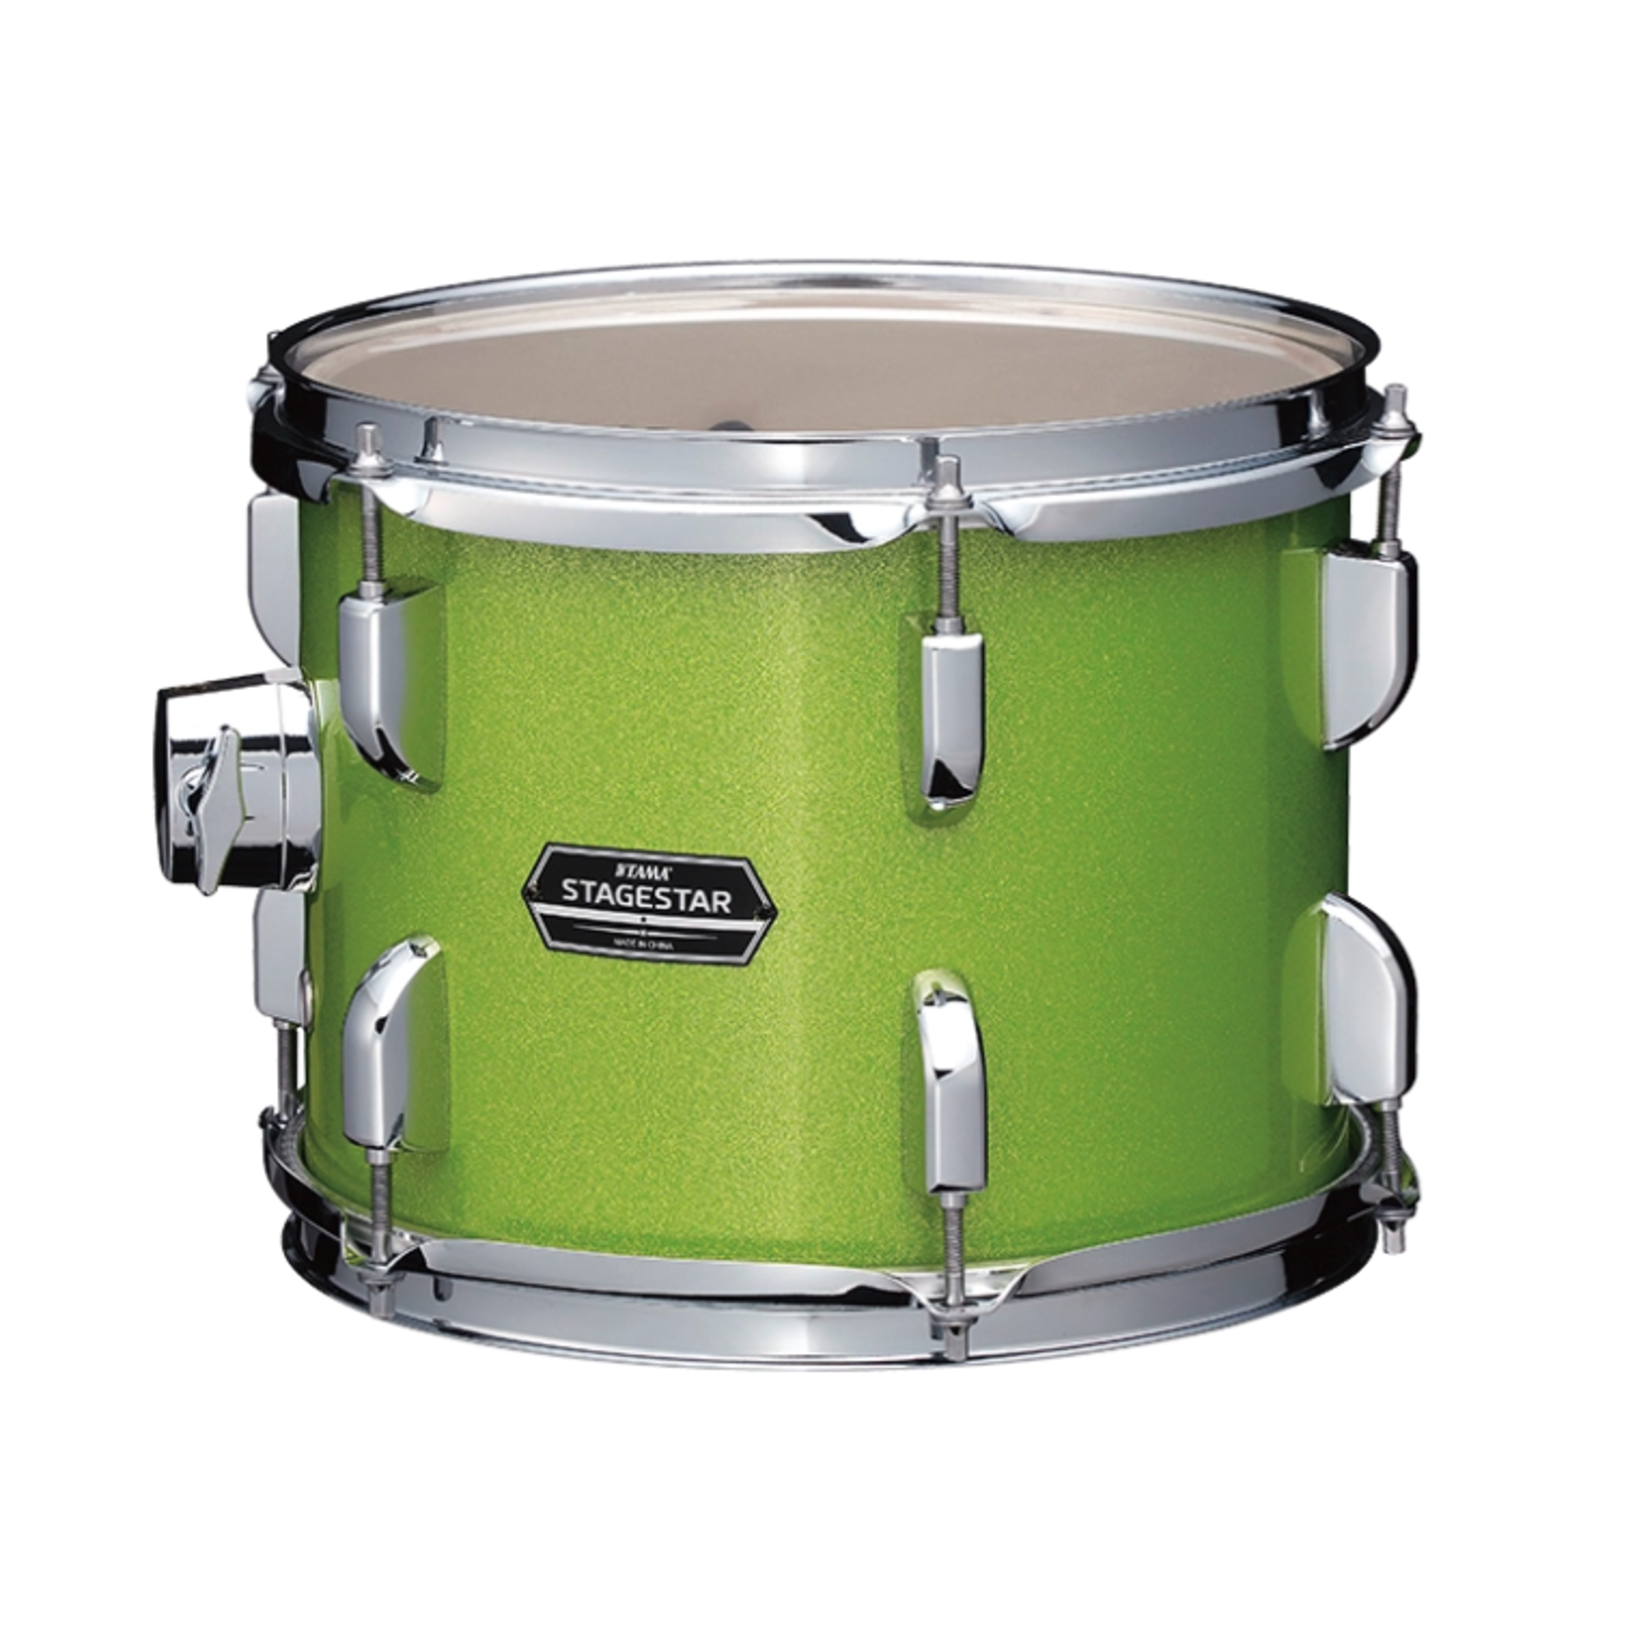 Tama Stagestar 5-Piece Complete Drum Set - Lime Green Sparkle